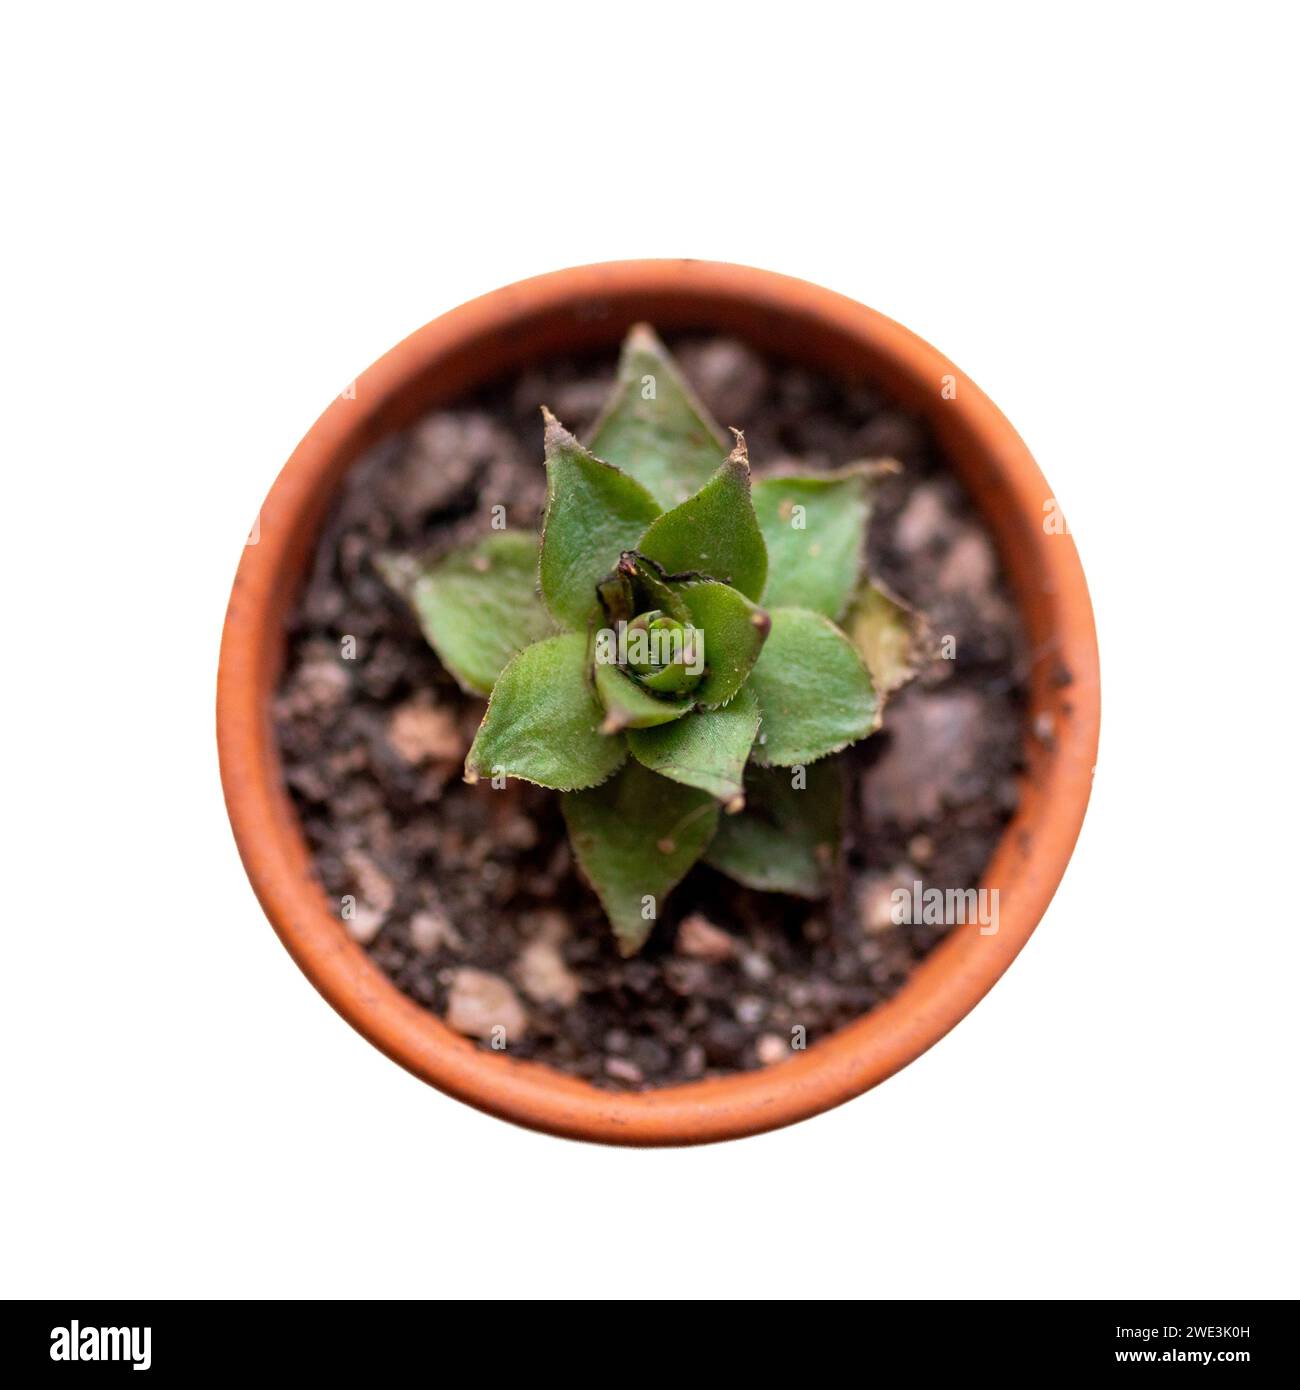 Close up of a mini Cactus plant. Shaun Fellows / Alamy Stock Photo